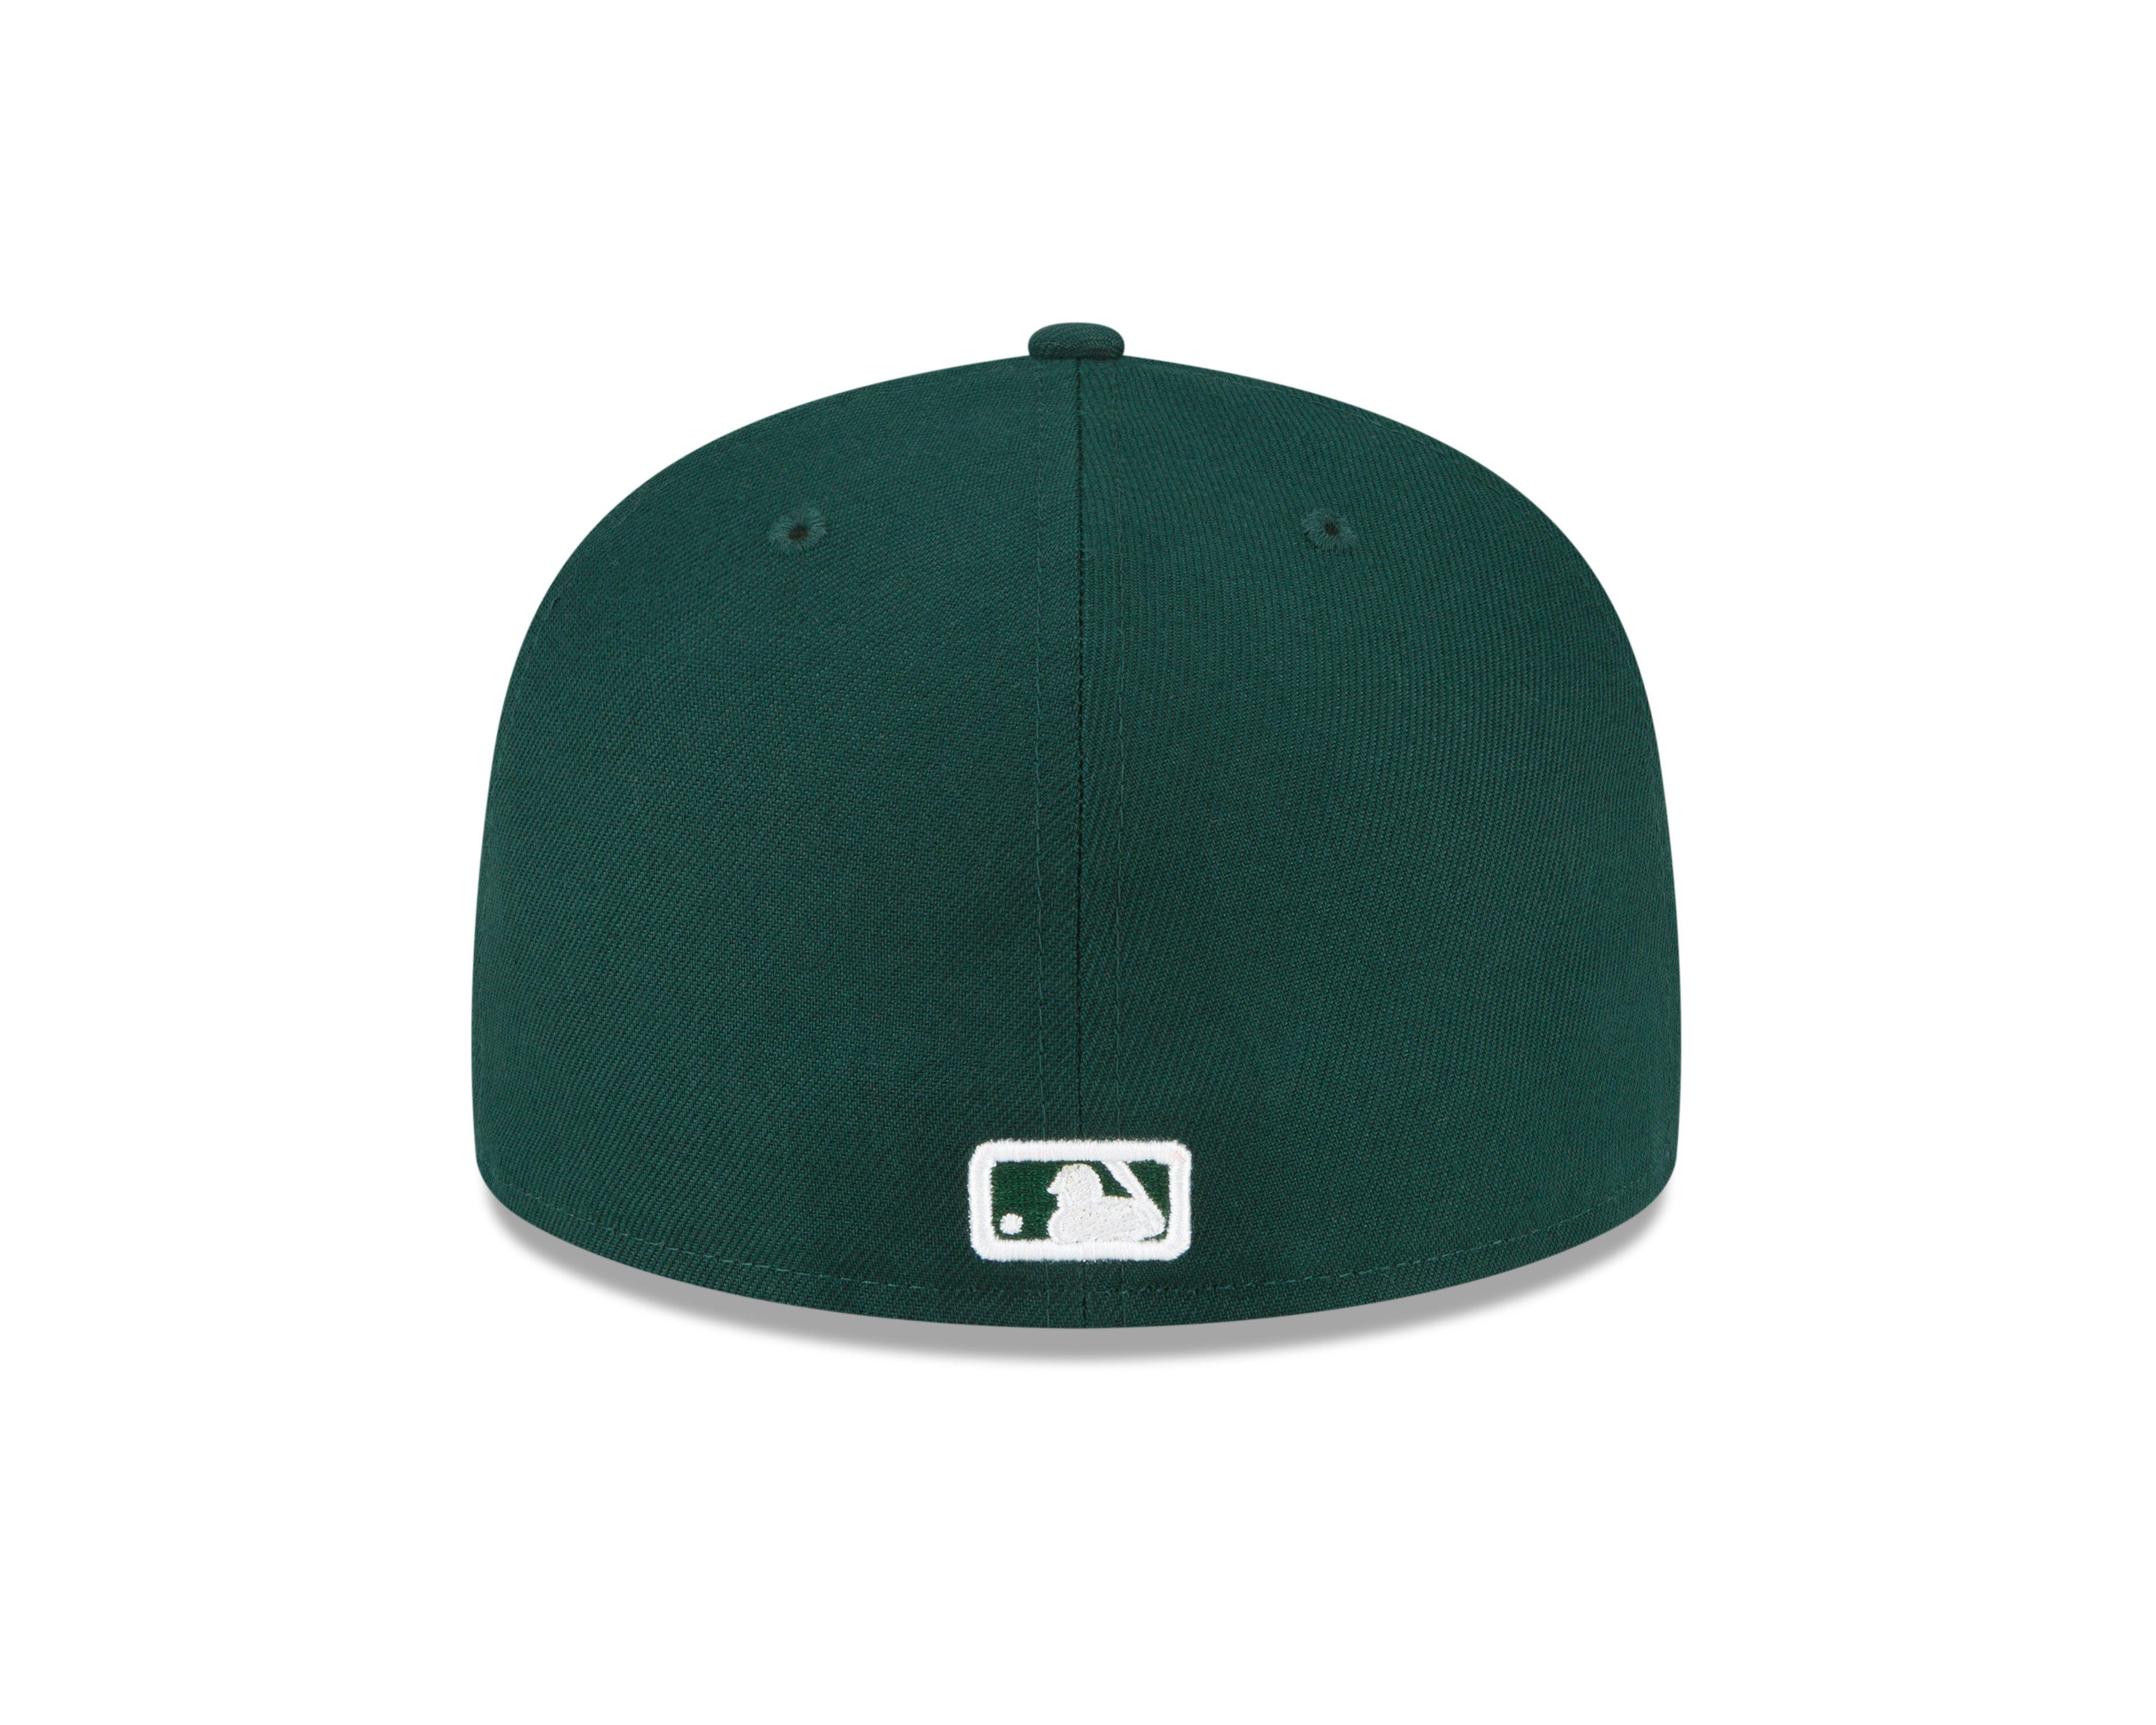 green detroit tigers hat